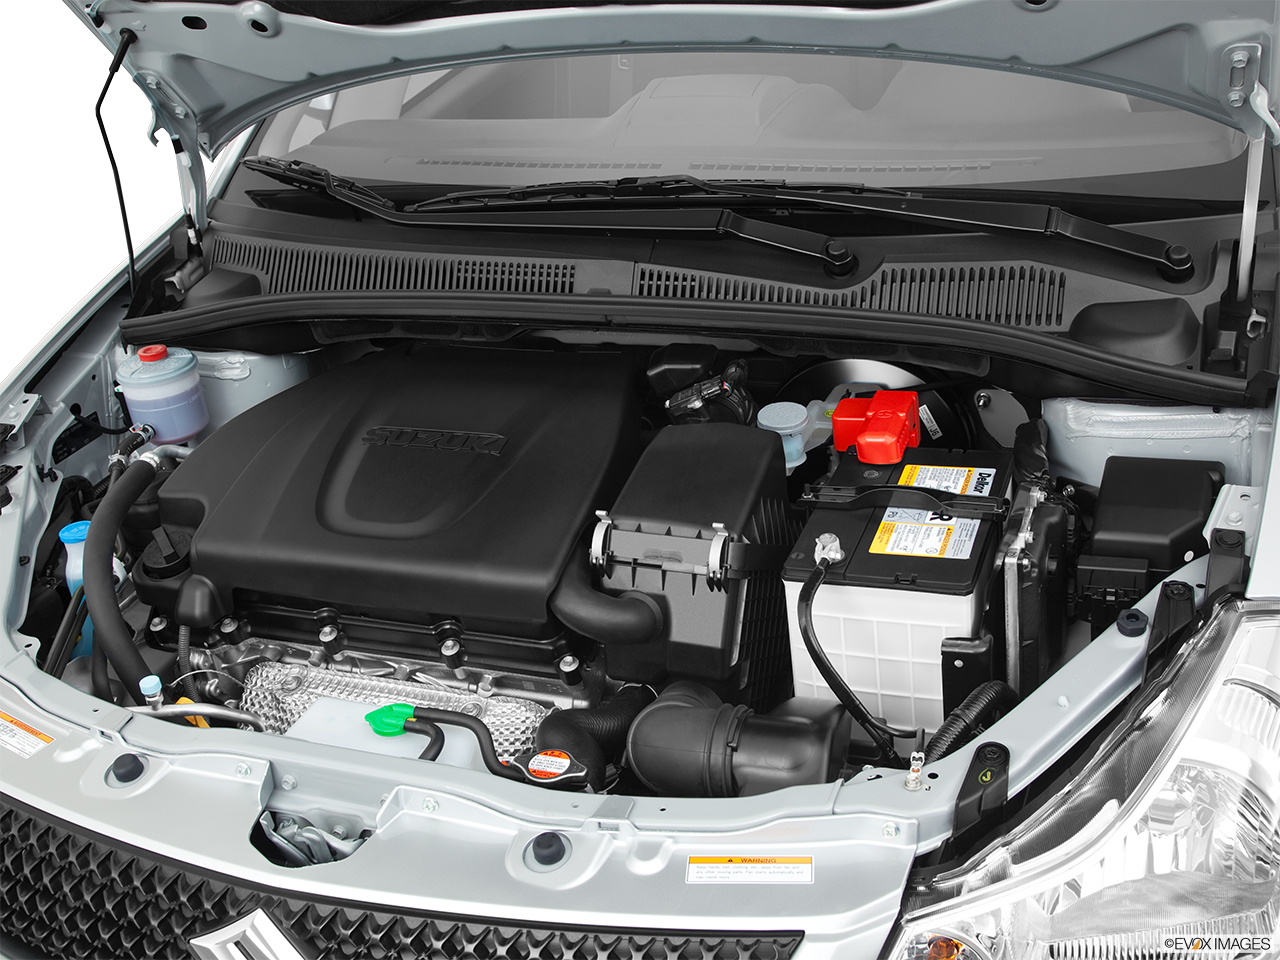 2011 Suzuki SX4 Sportback Technology Engine. 